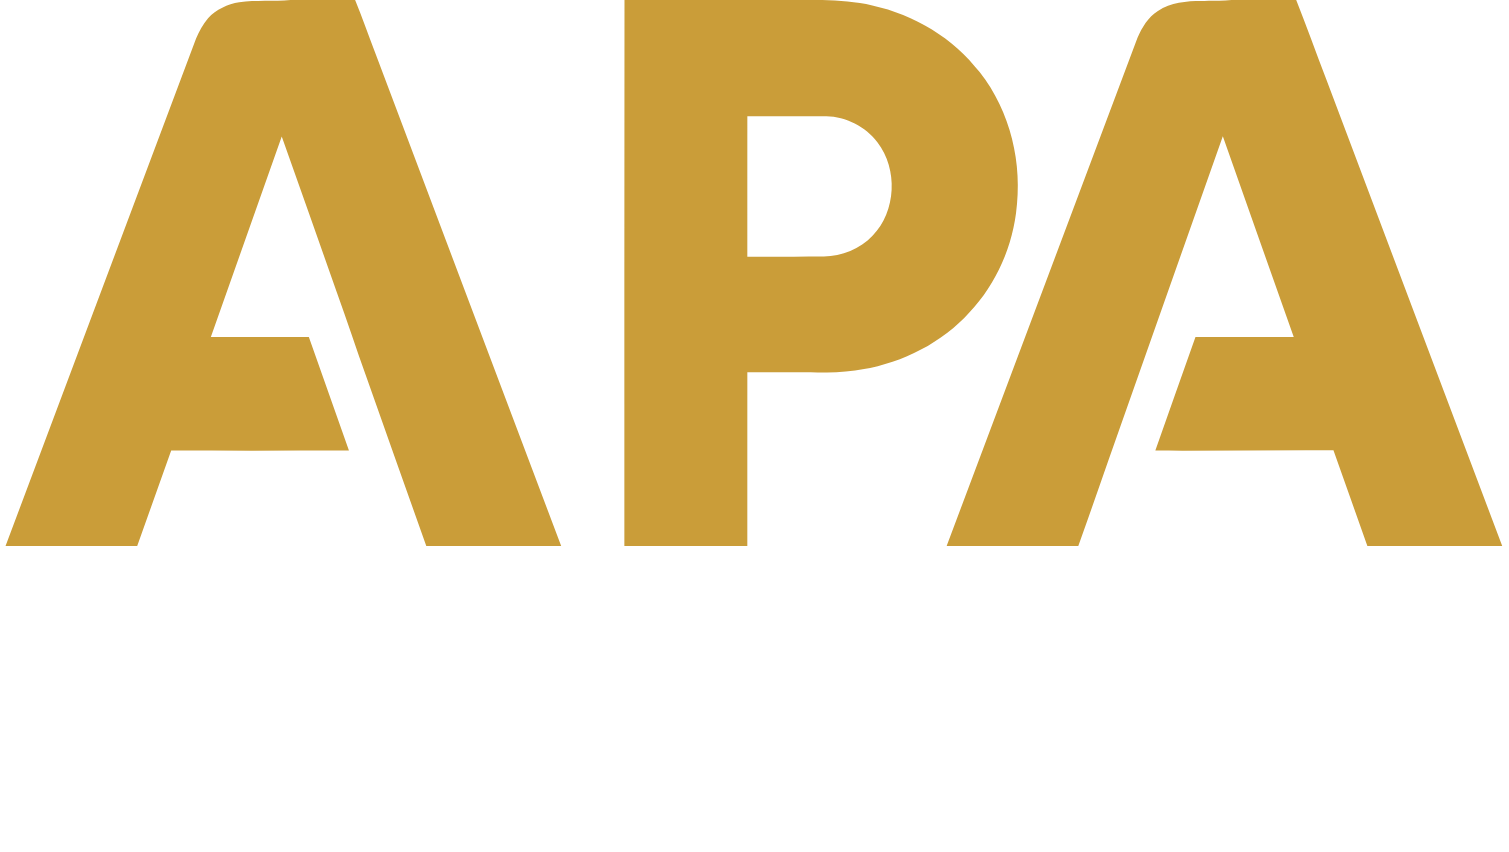 Apache Corporation logo large for dark backgrounds (transparent PNG)